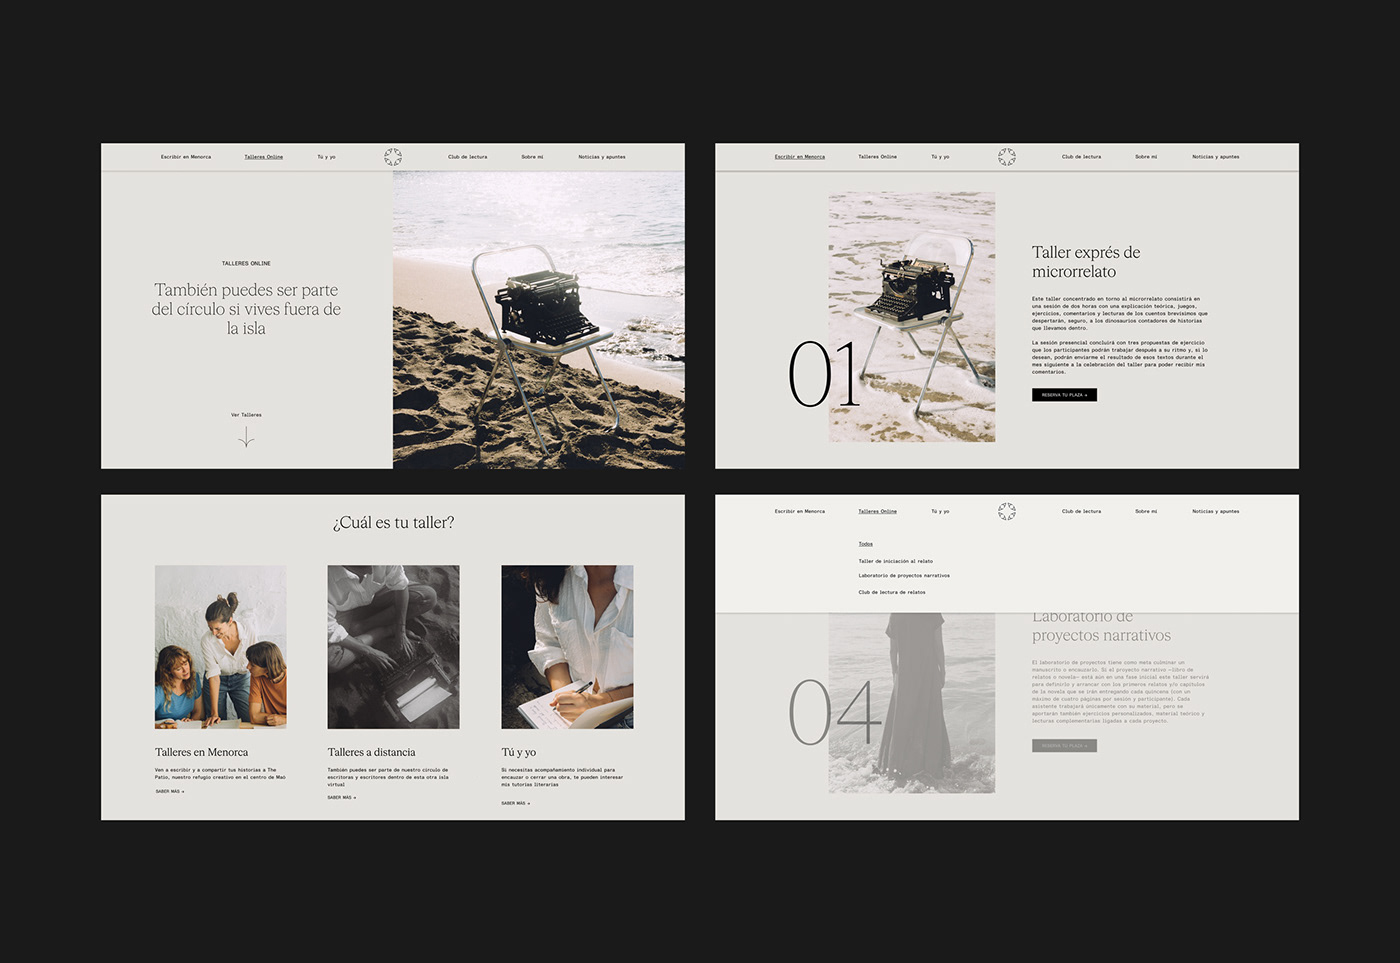 Website screens of Ana Haro's website featuring a modern, minimalist UI design